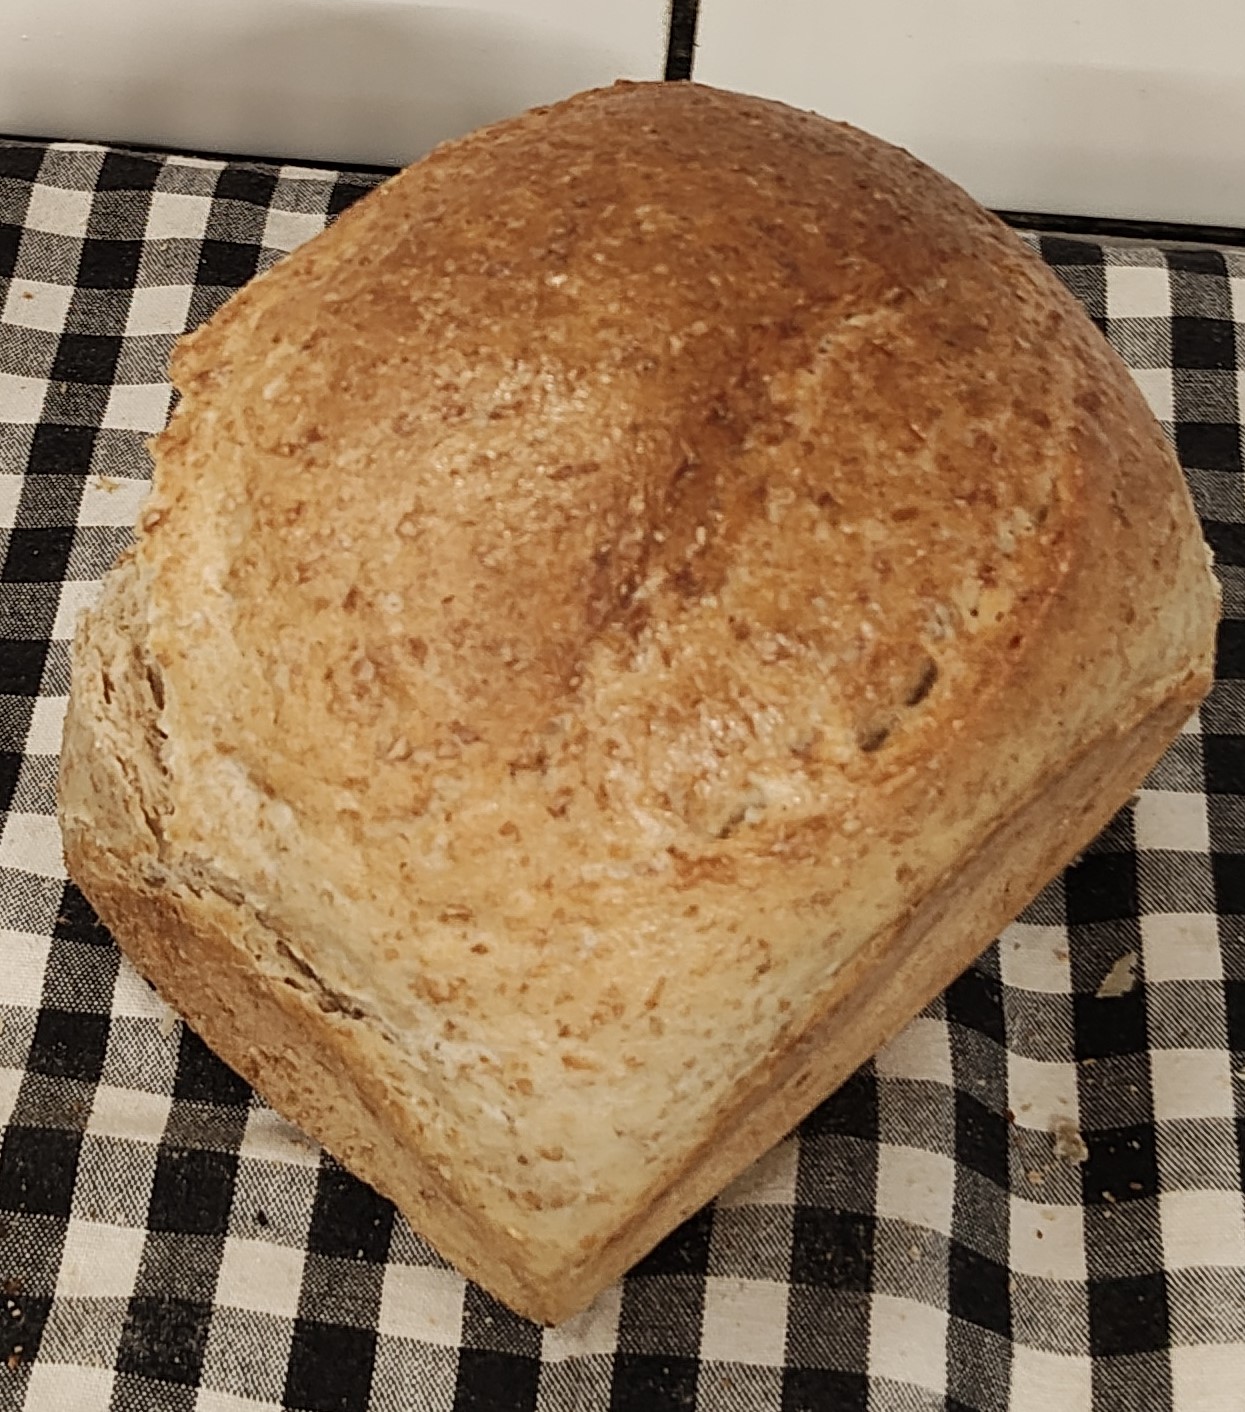 Oven Graham bread